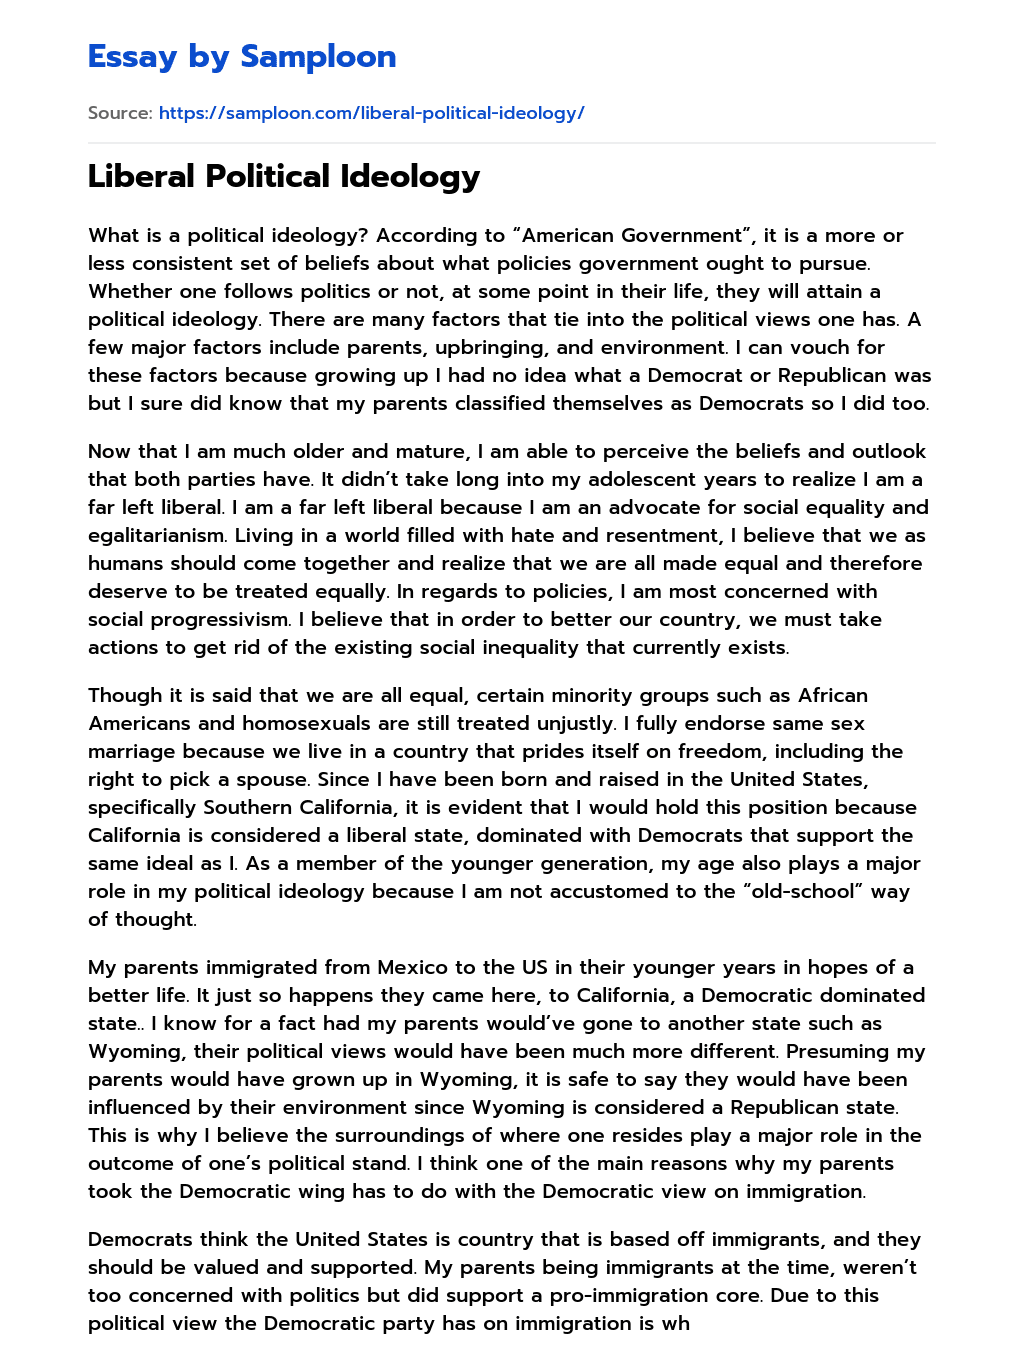 Liberal Political Ideology essay